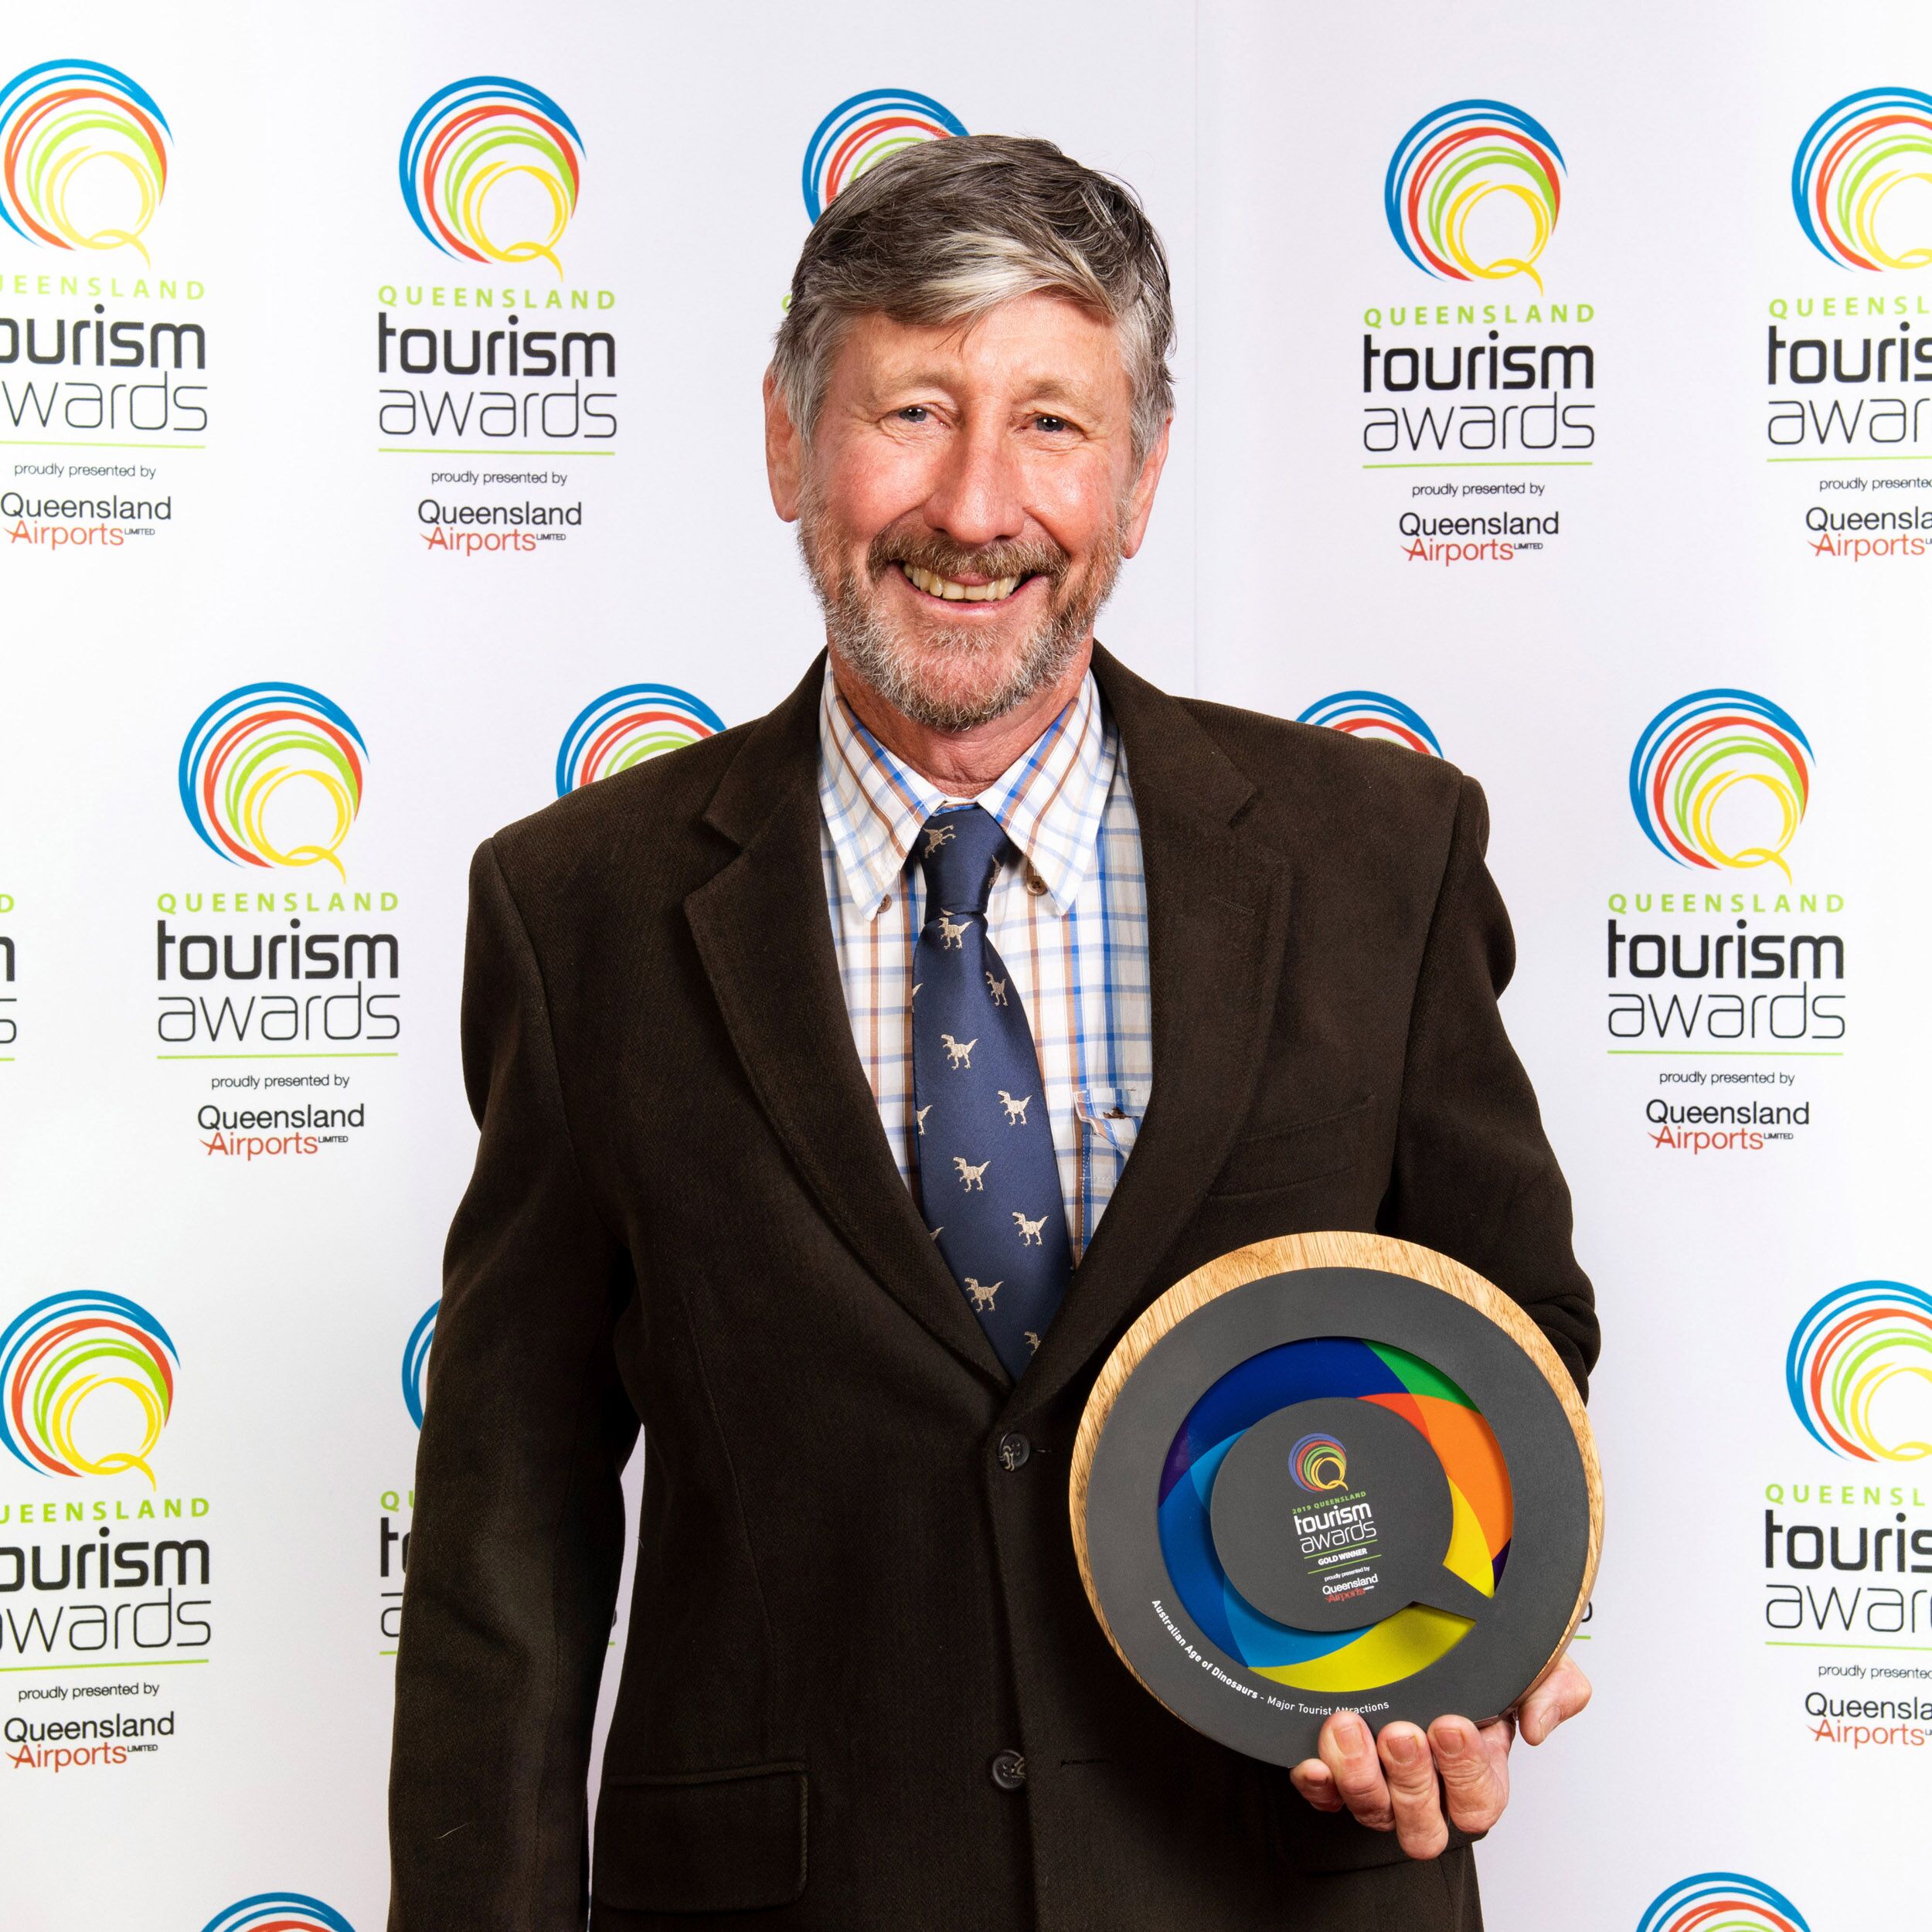 qld tourism awards winners